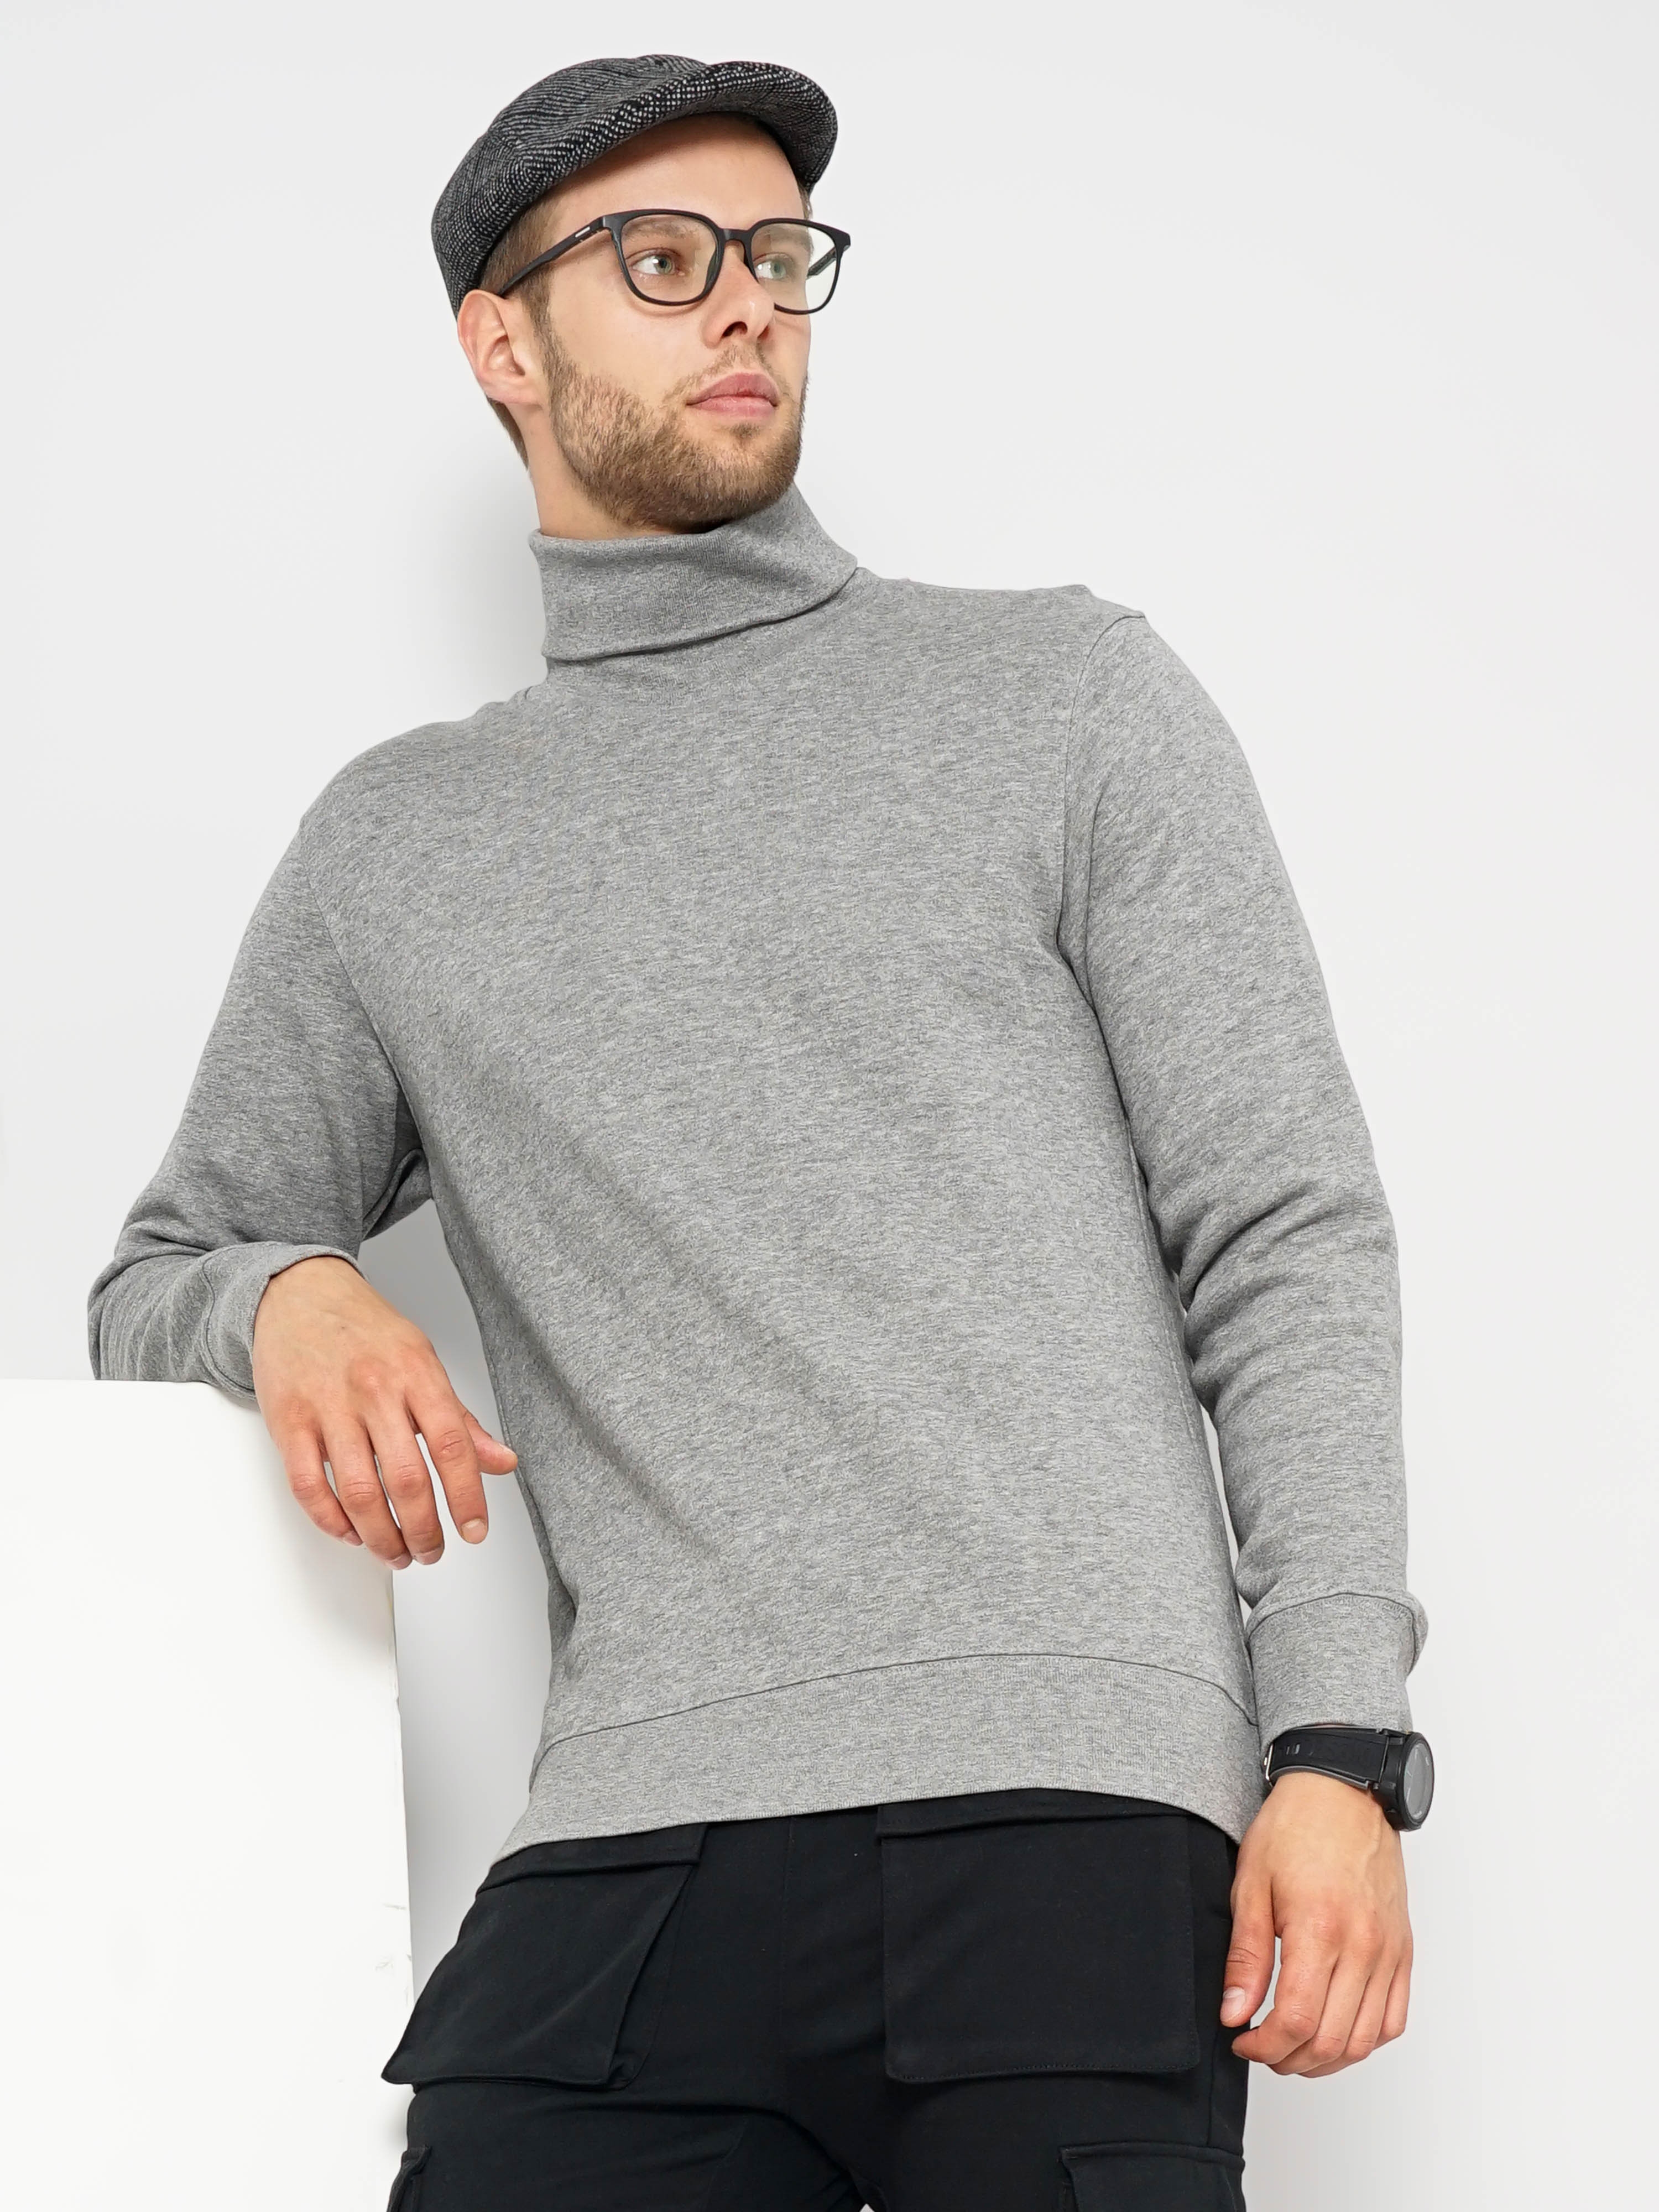 Men's Grey Knitted Sweatshirts